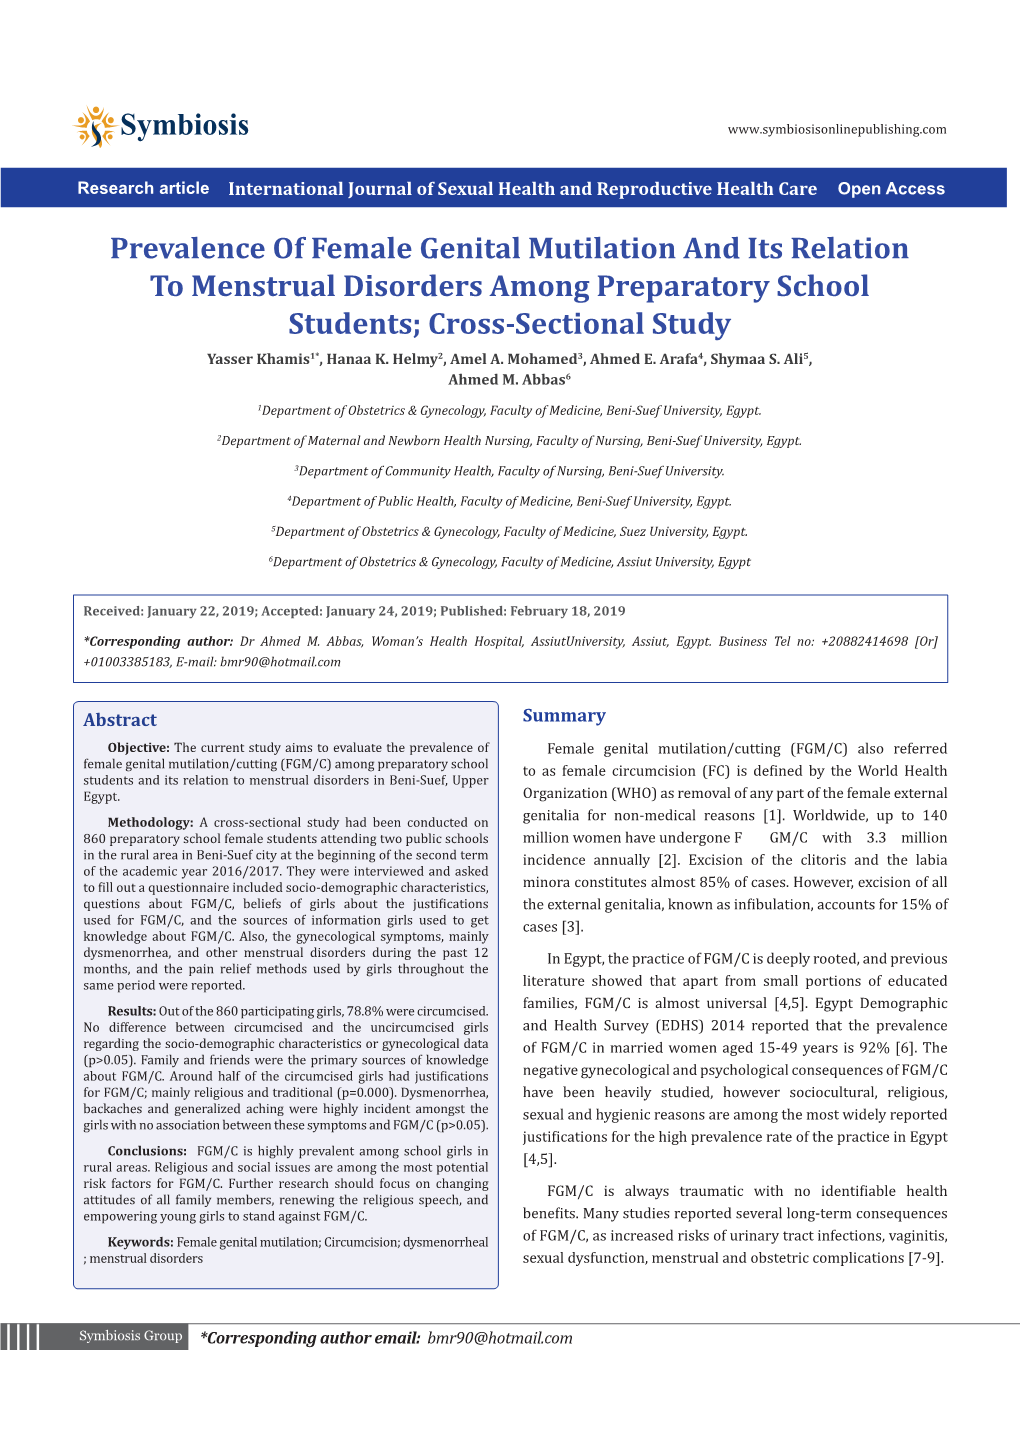 Prevalence of Female Genital Mutilation and Its Relation to Menstrual Disorders Among Preparatory School Students; Cross-Sectional Study Yasser Khamis1*, Hanaa K